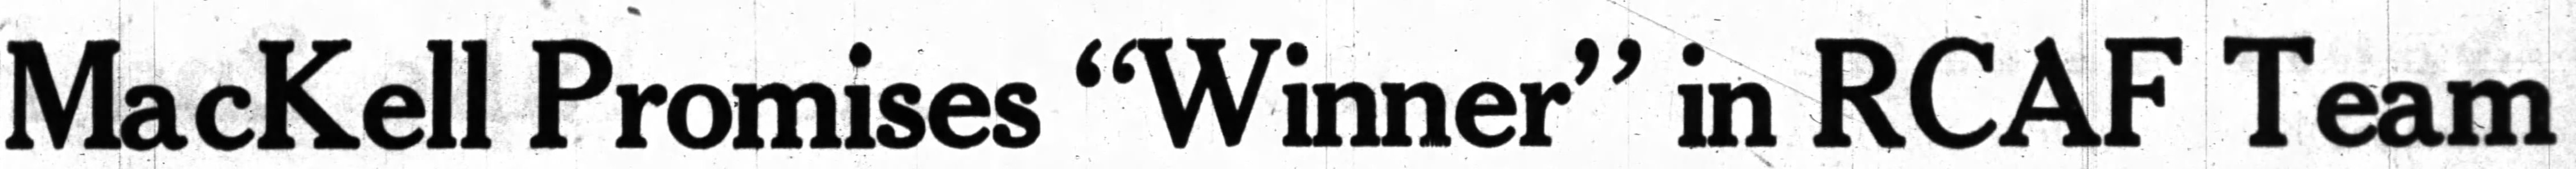 Image: Oct 18 1947 Ottawa Newspaper Headline Mackell Promises Winner with RCAF